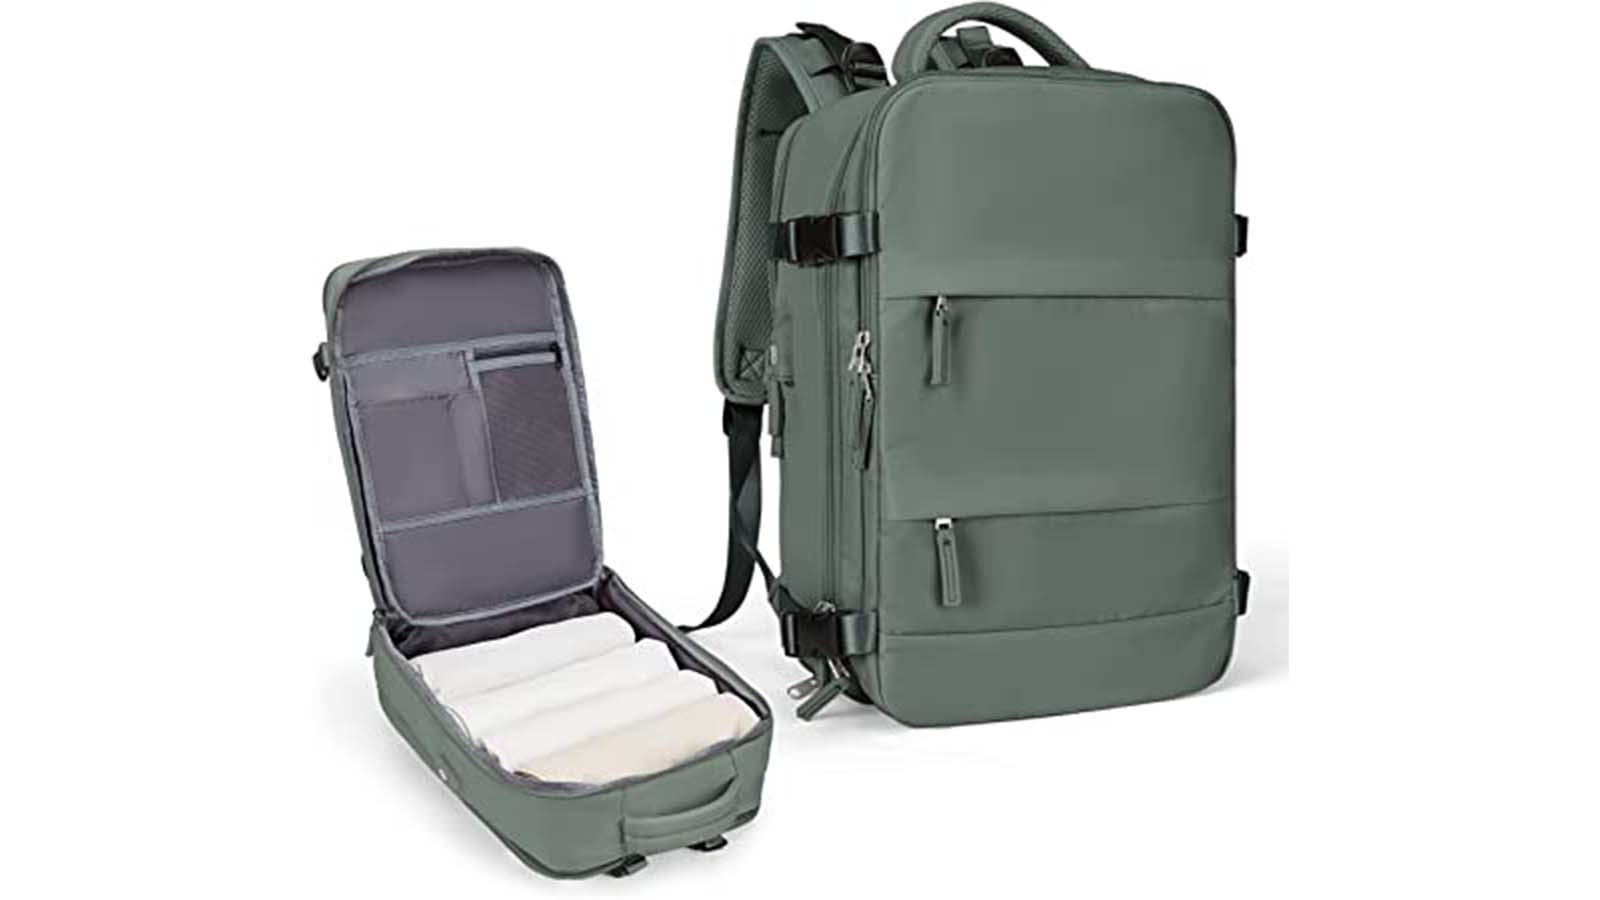   Basics Carry-On Travel Backpack - Black